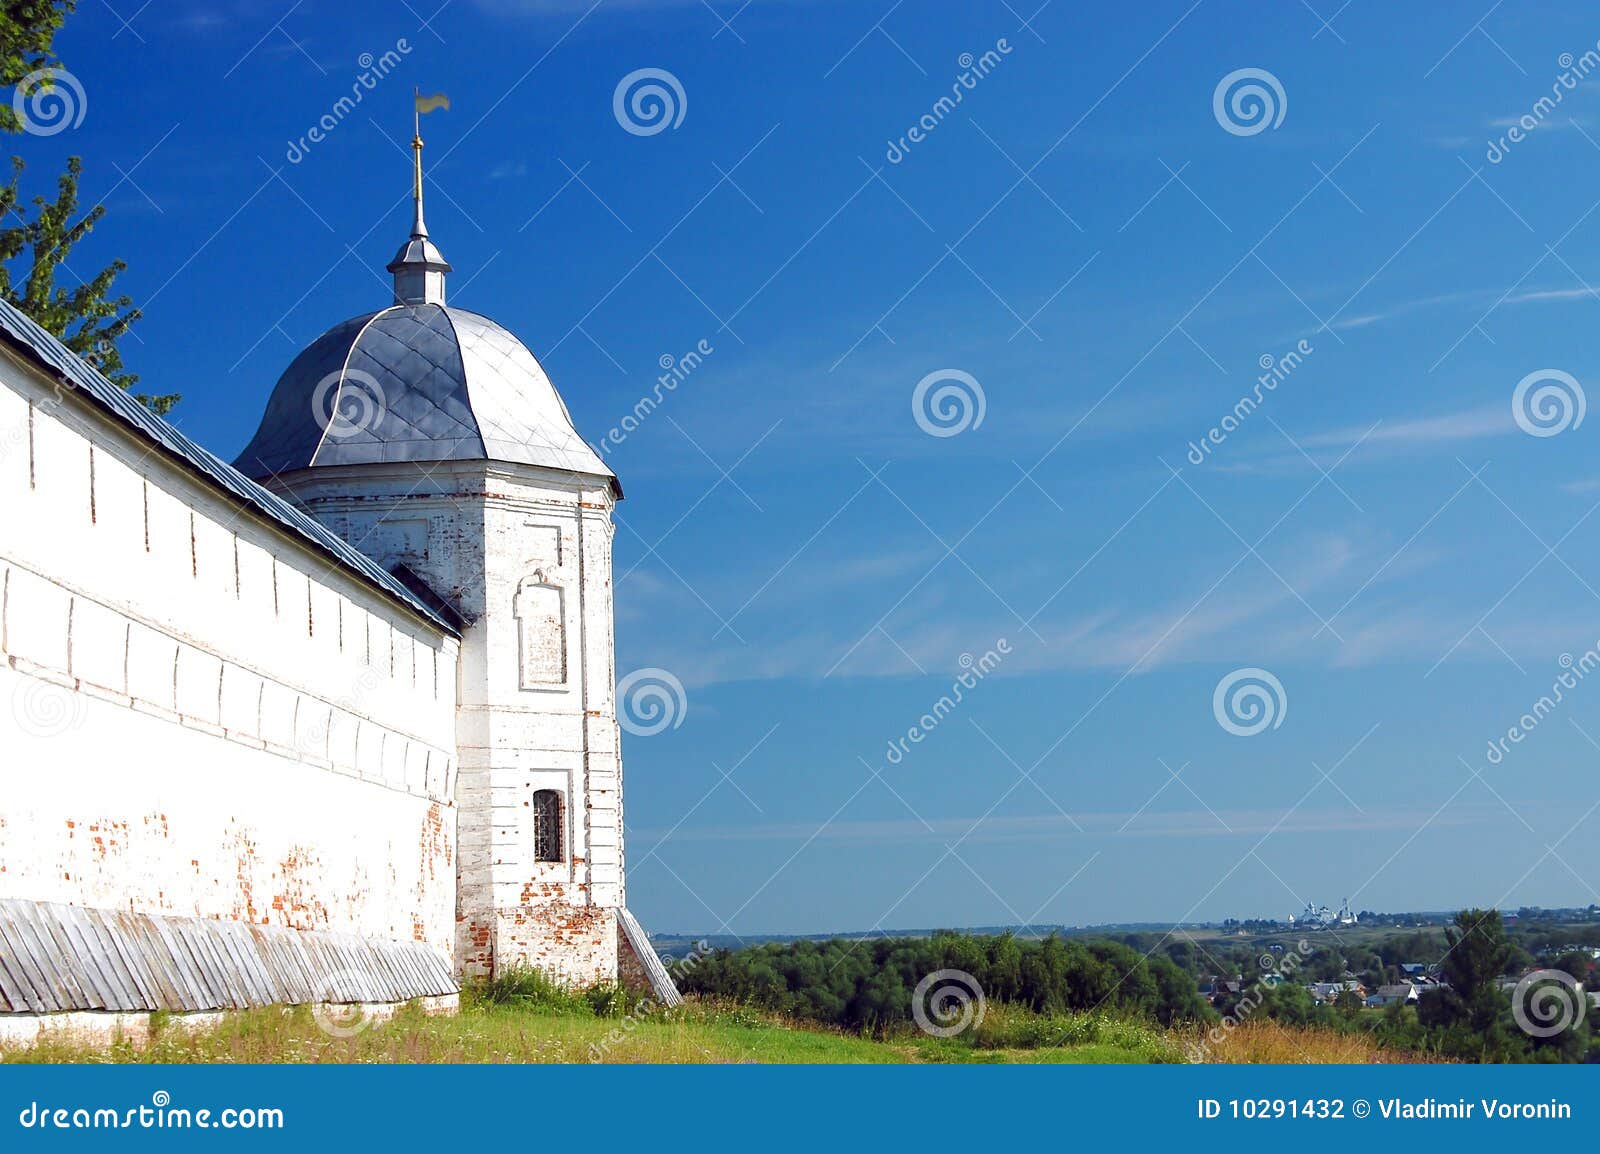 fourteenth century monastery in pereslavl, russia